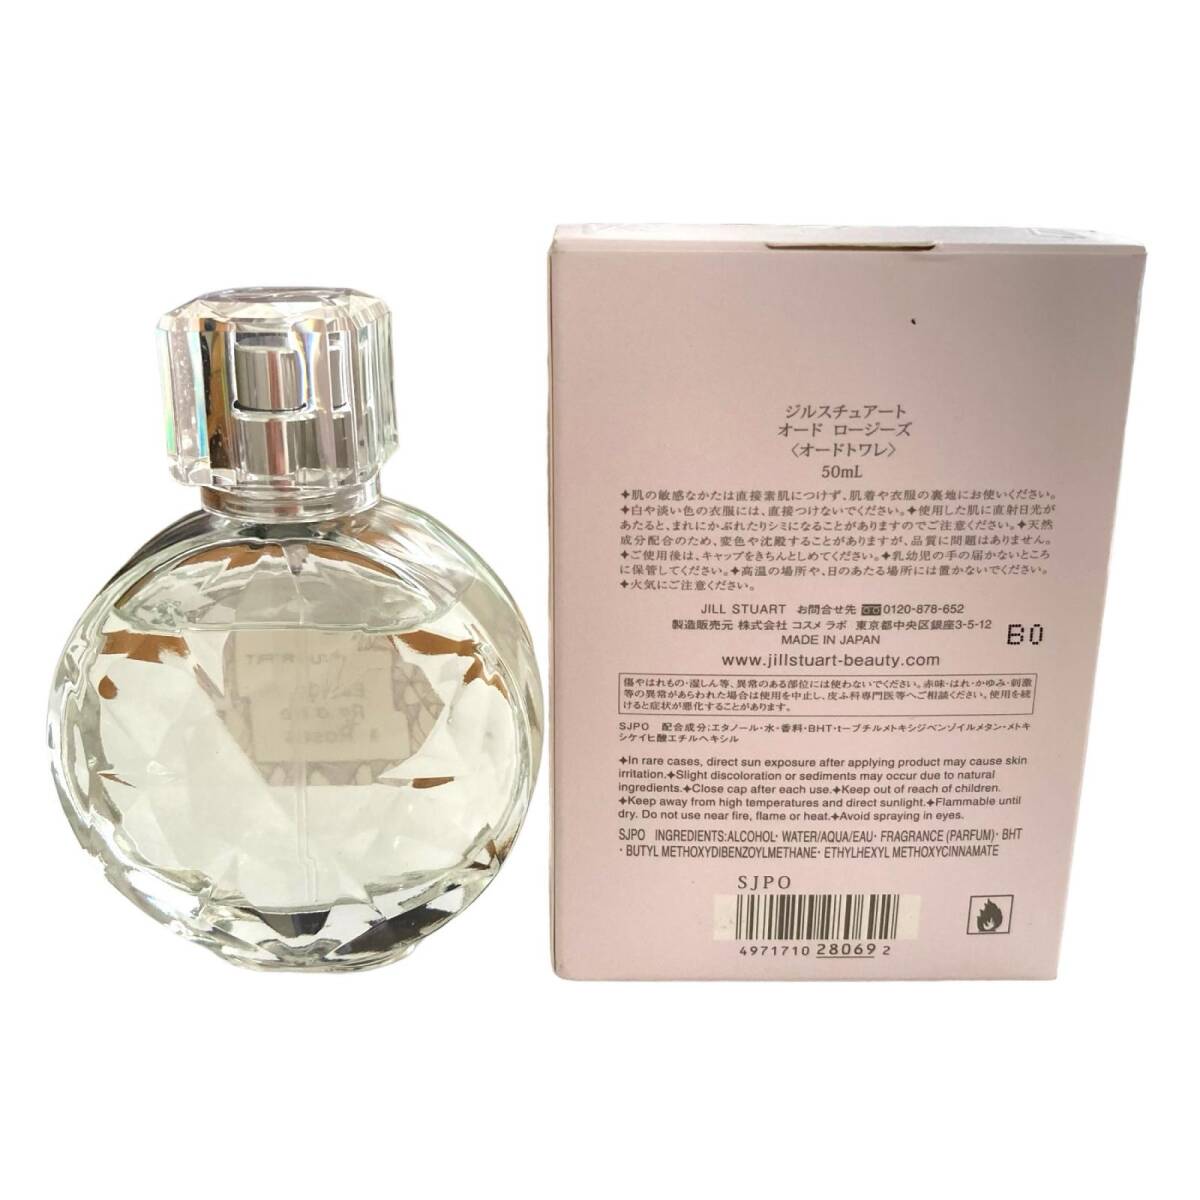 JILLSTUART Jill Stuart o-do white floral o-doto crack EDT perfume 50ml 3 point set 